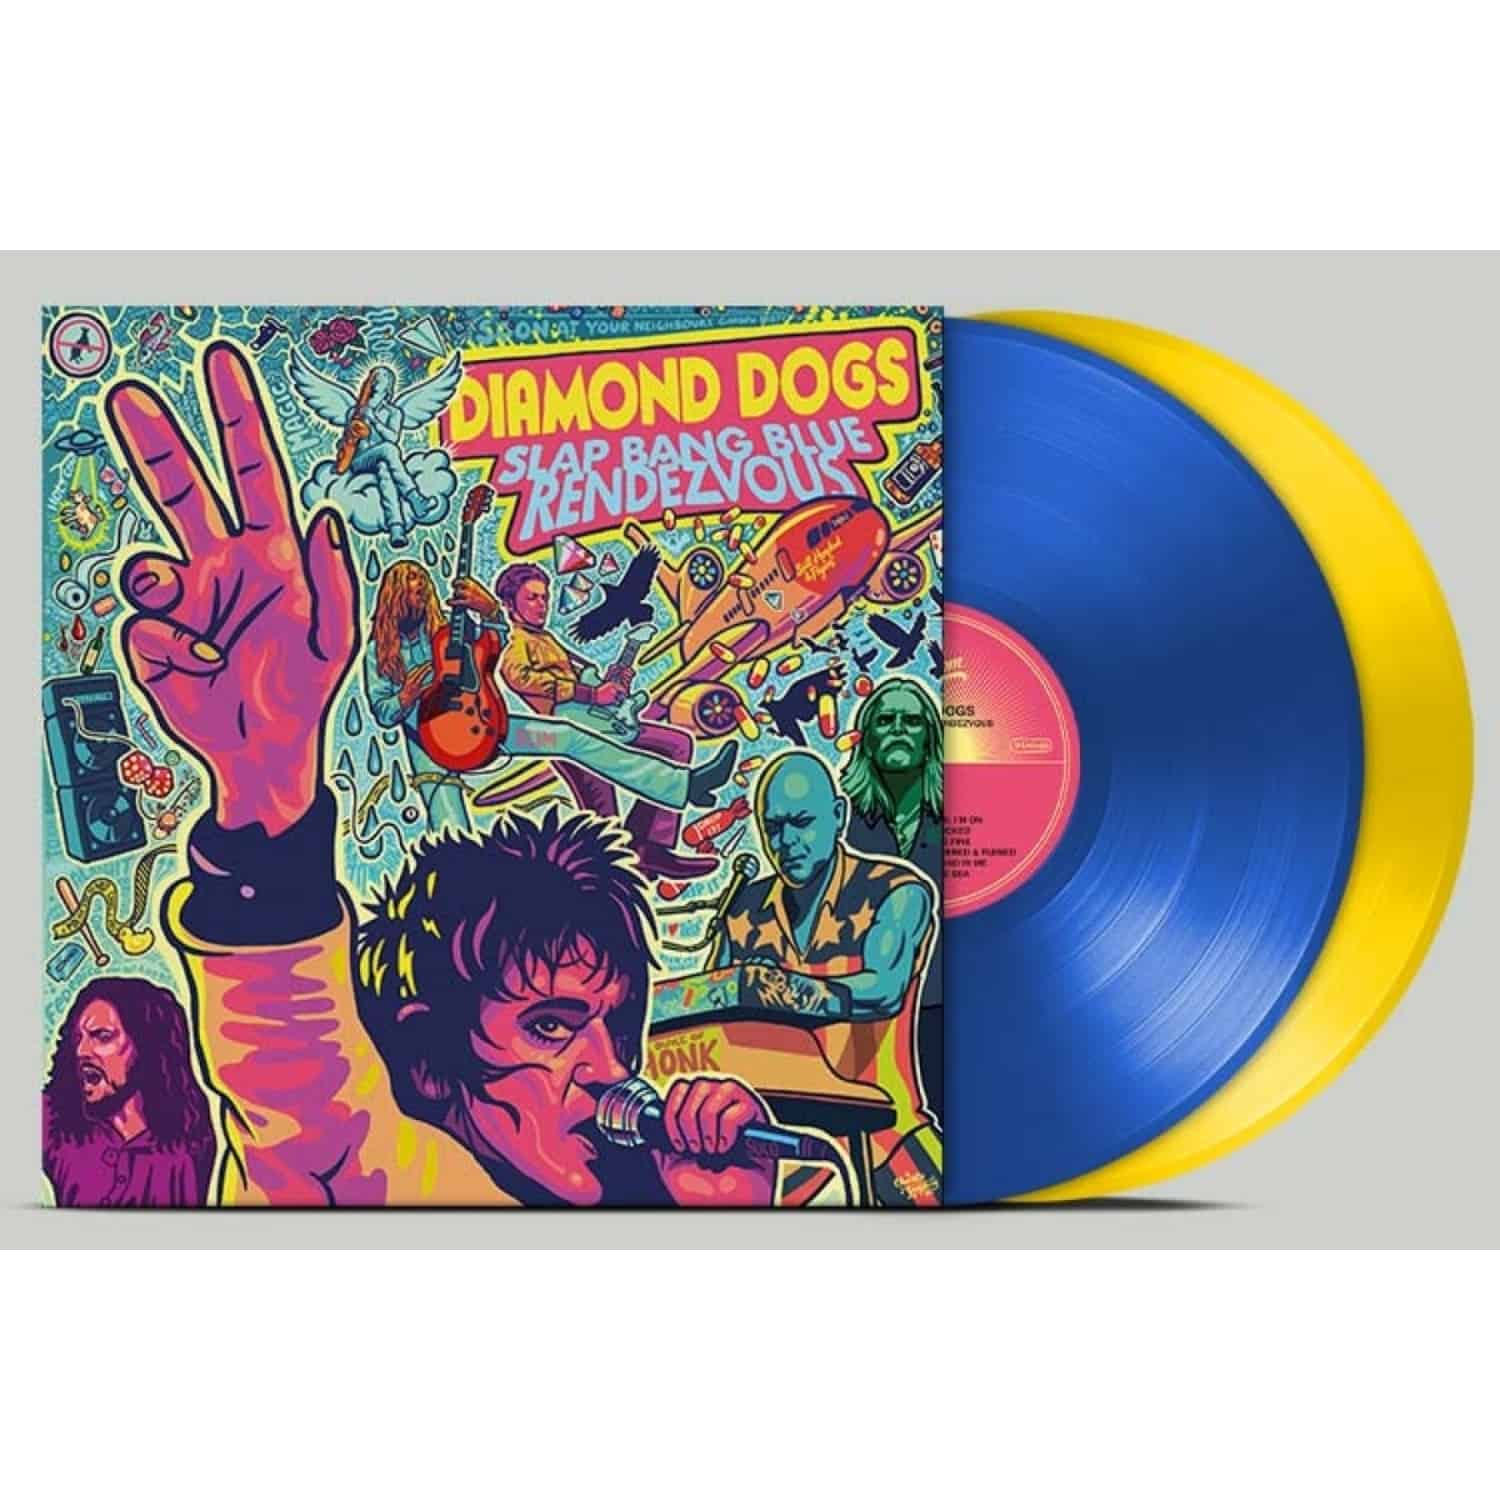 Diamond Dogs - SLAP BANG BLUE RENDEZVOUS 